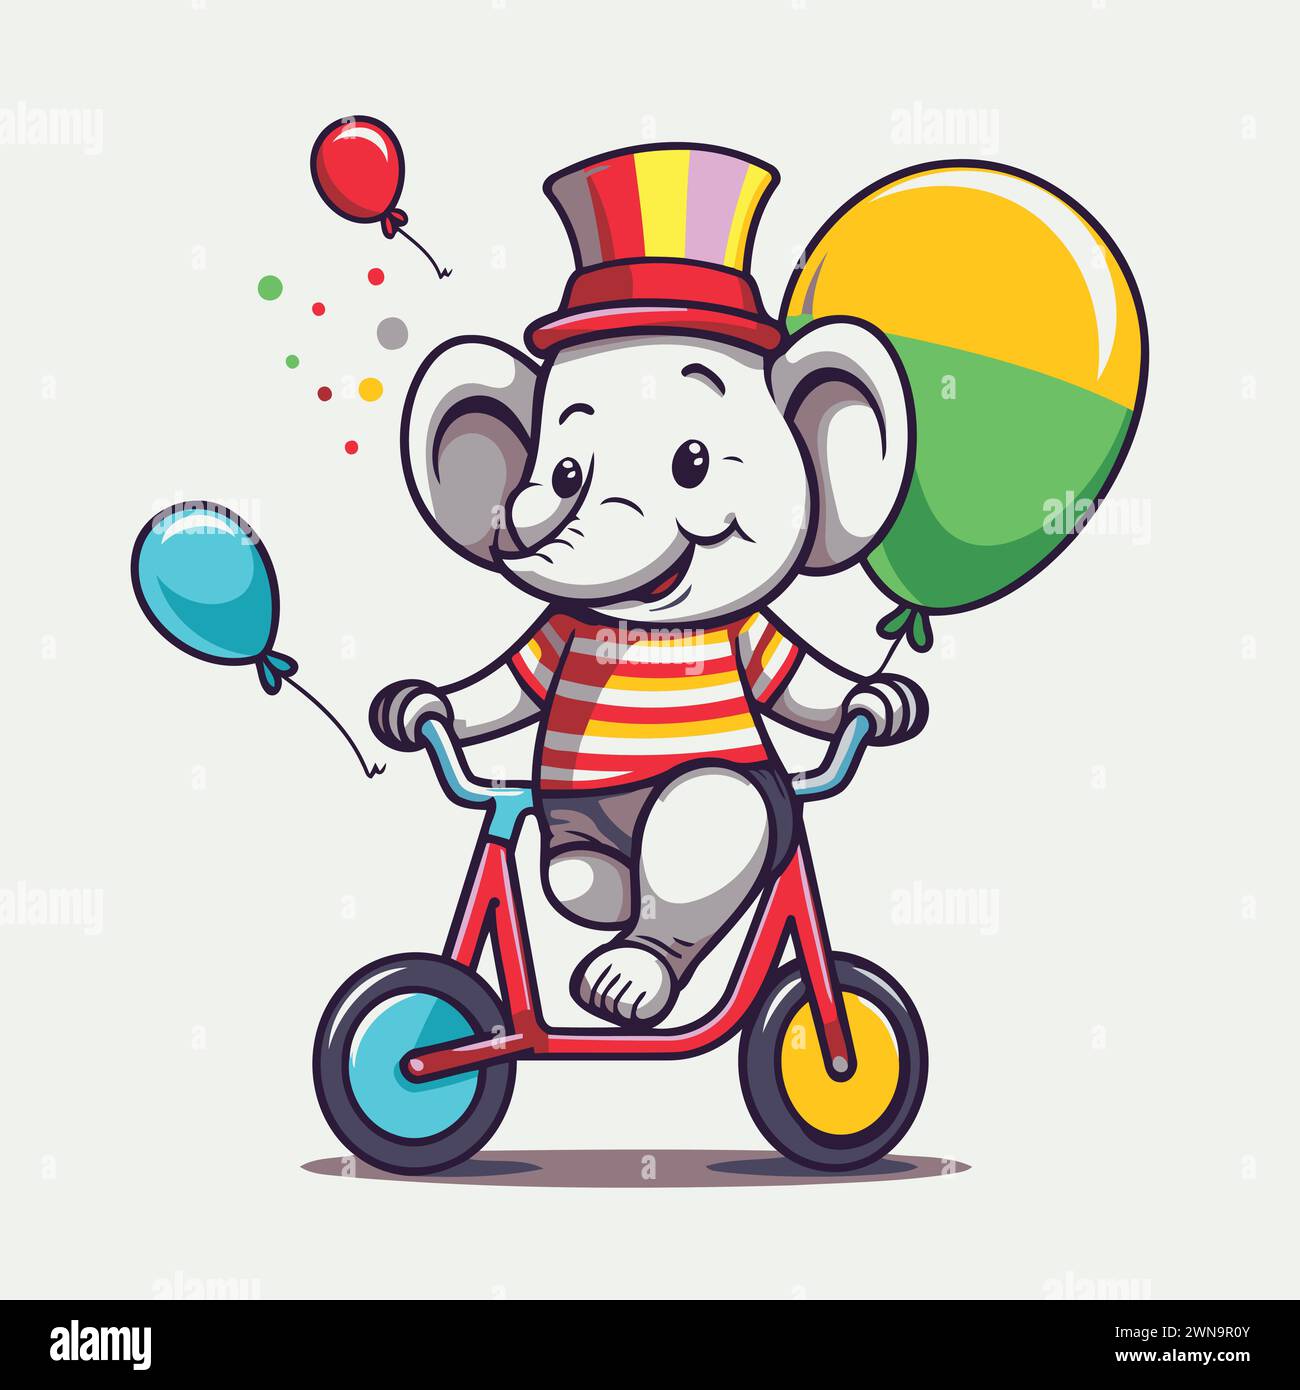 Der süße Elefant fährt mit Ballons auf dem Fahrrad. Vektor-Illustration im Cartoon-Stil. Stock Vektor